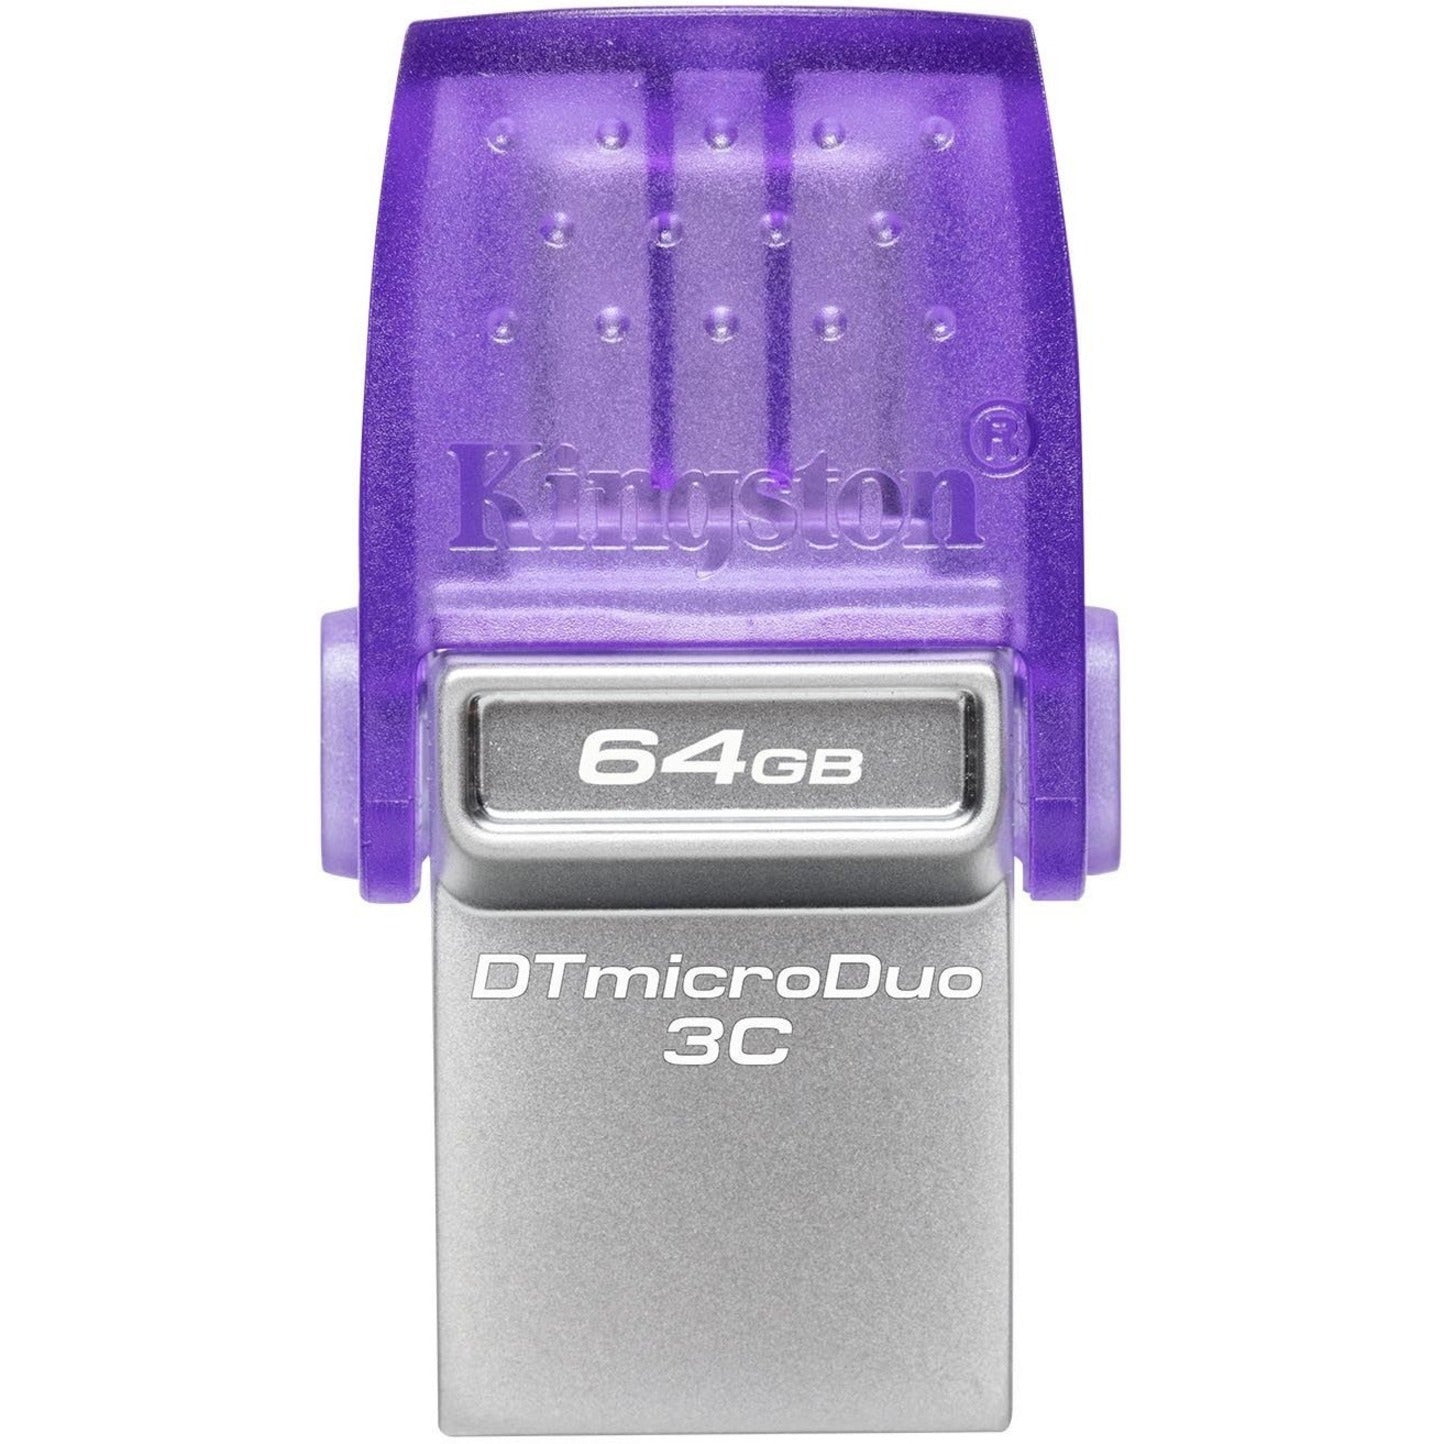 Kingston DTDUO3CG3/64GB DataTraveler microDuo 3C USB Flash Drive, 64GB Storage, Purple